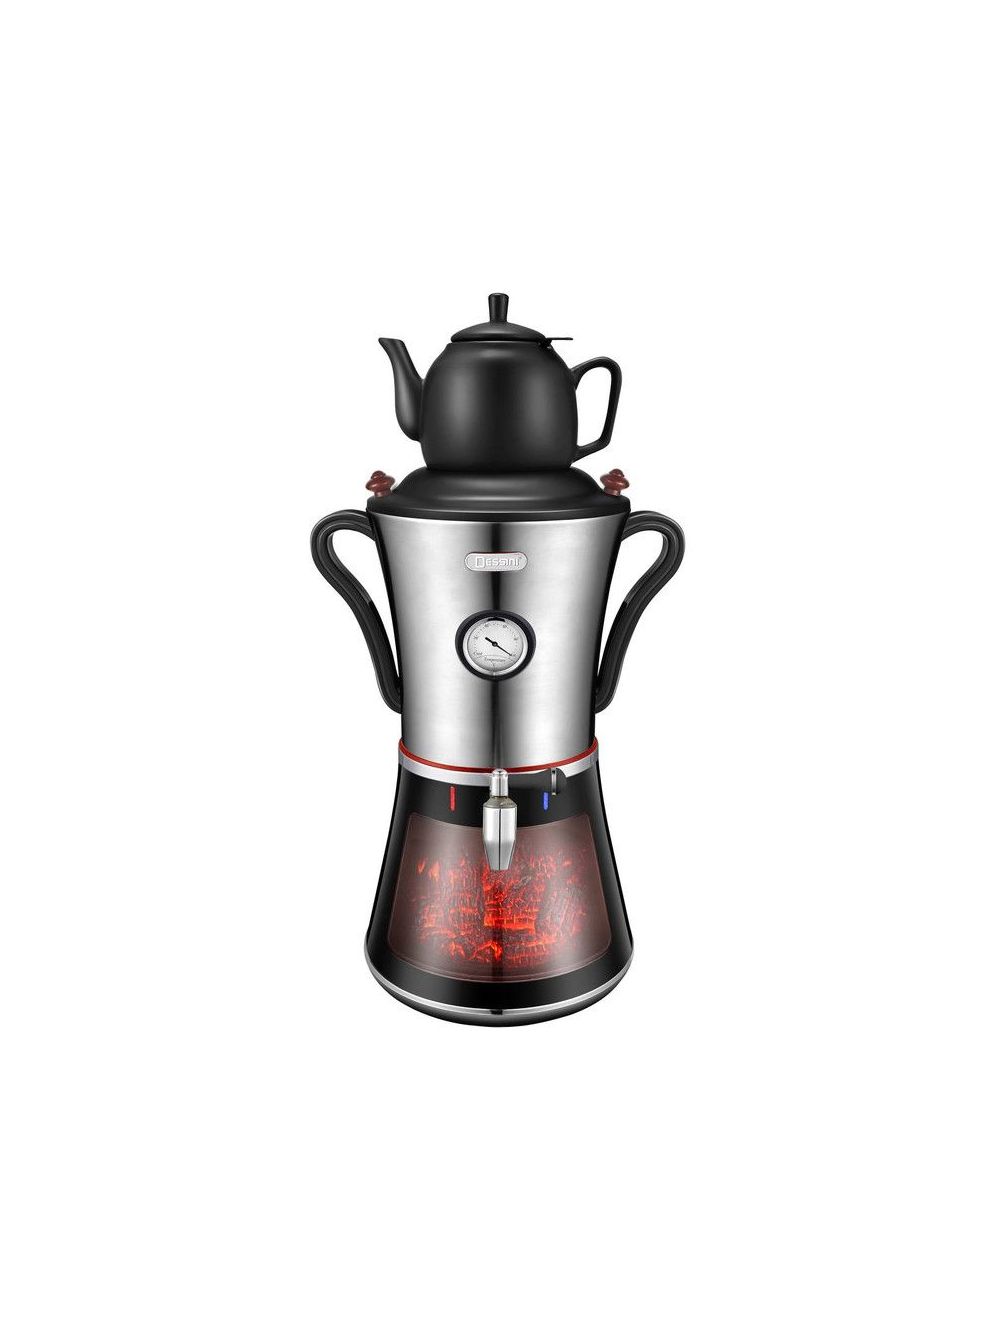 Dessini Electric Samovar For Coffee And Tea 3.2 Liters Capacity Color Black-AKA642